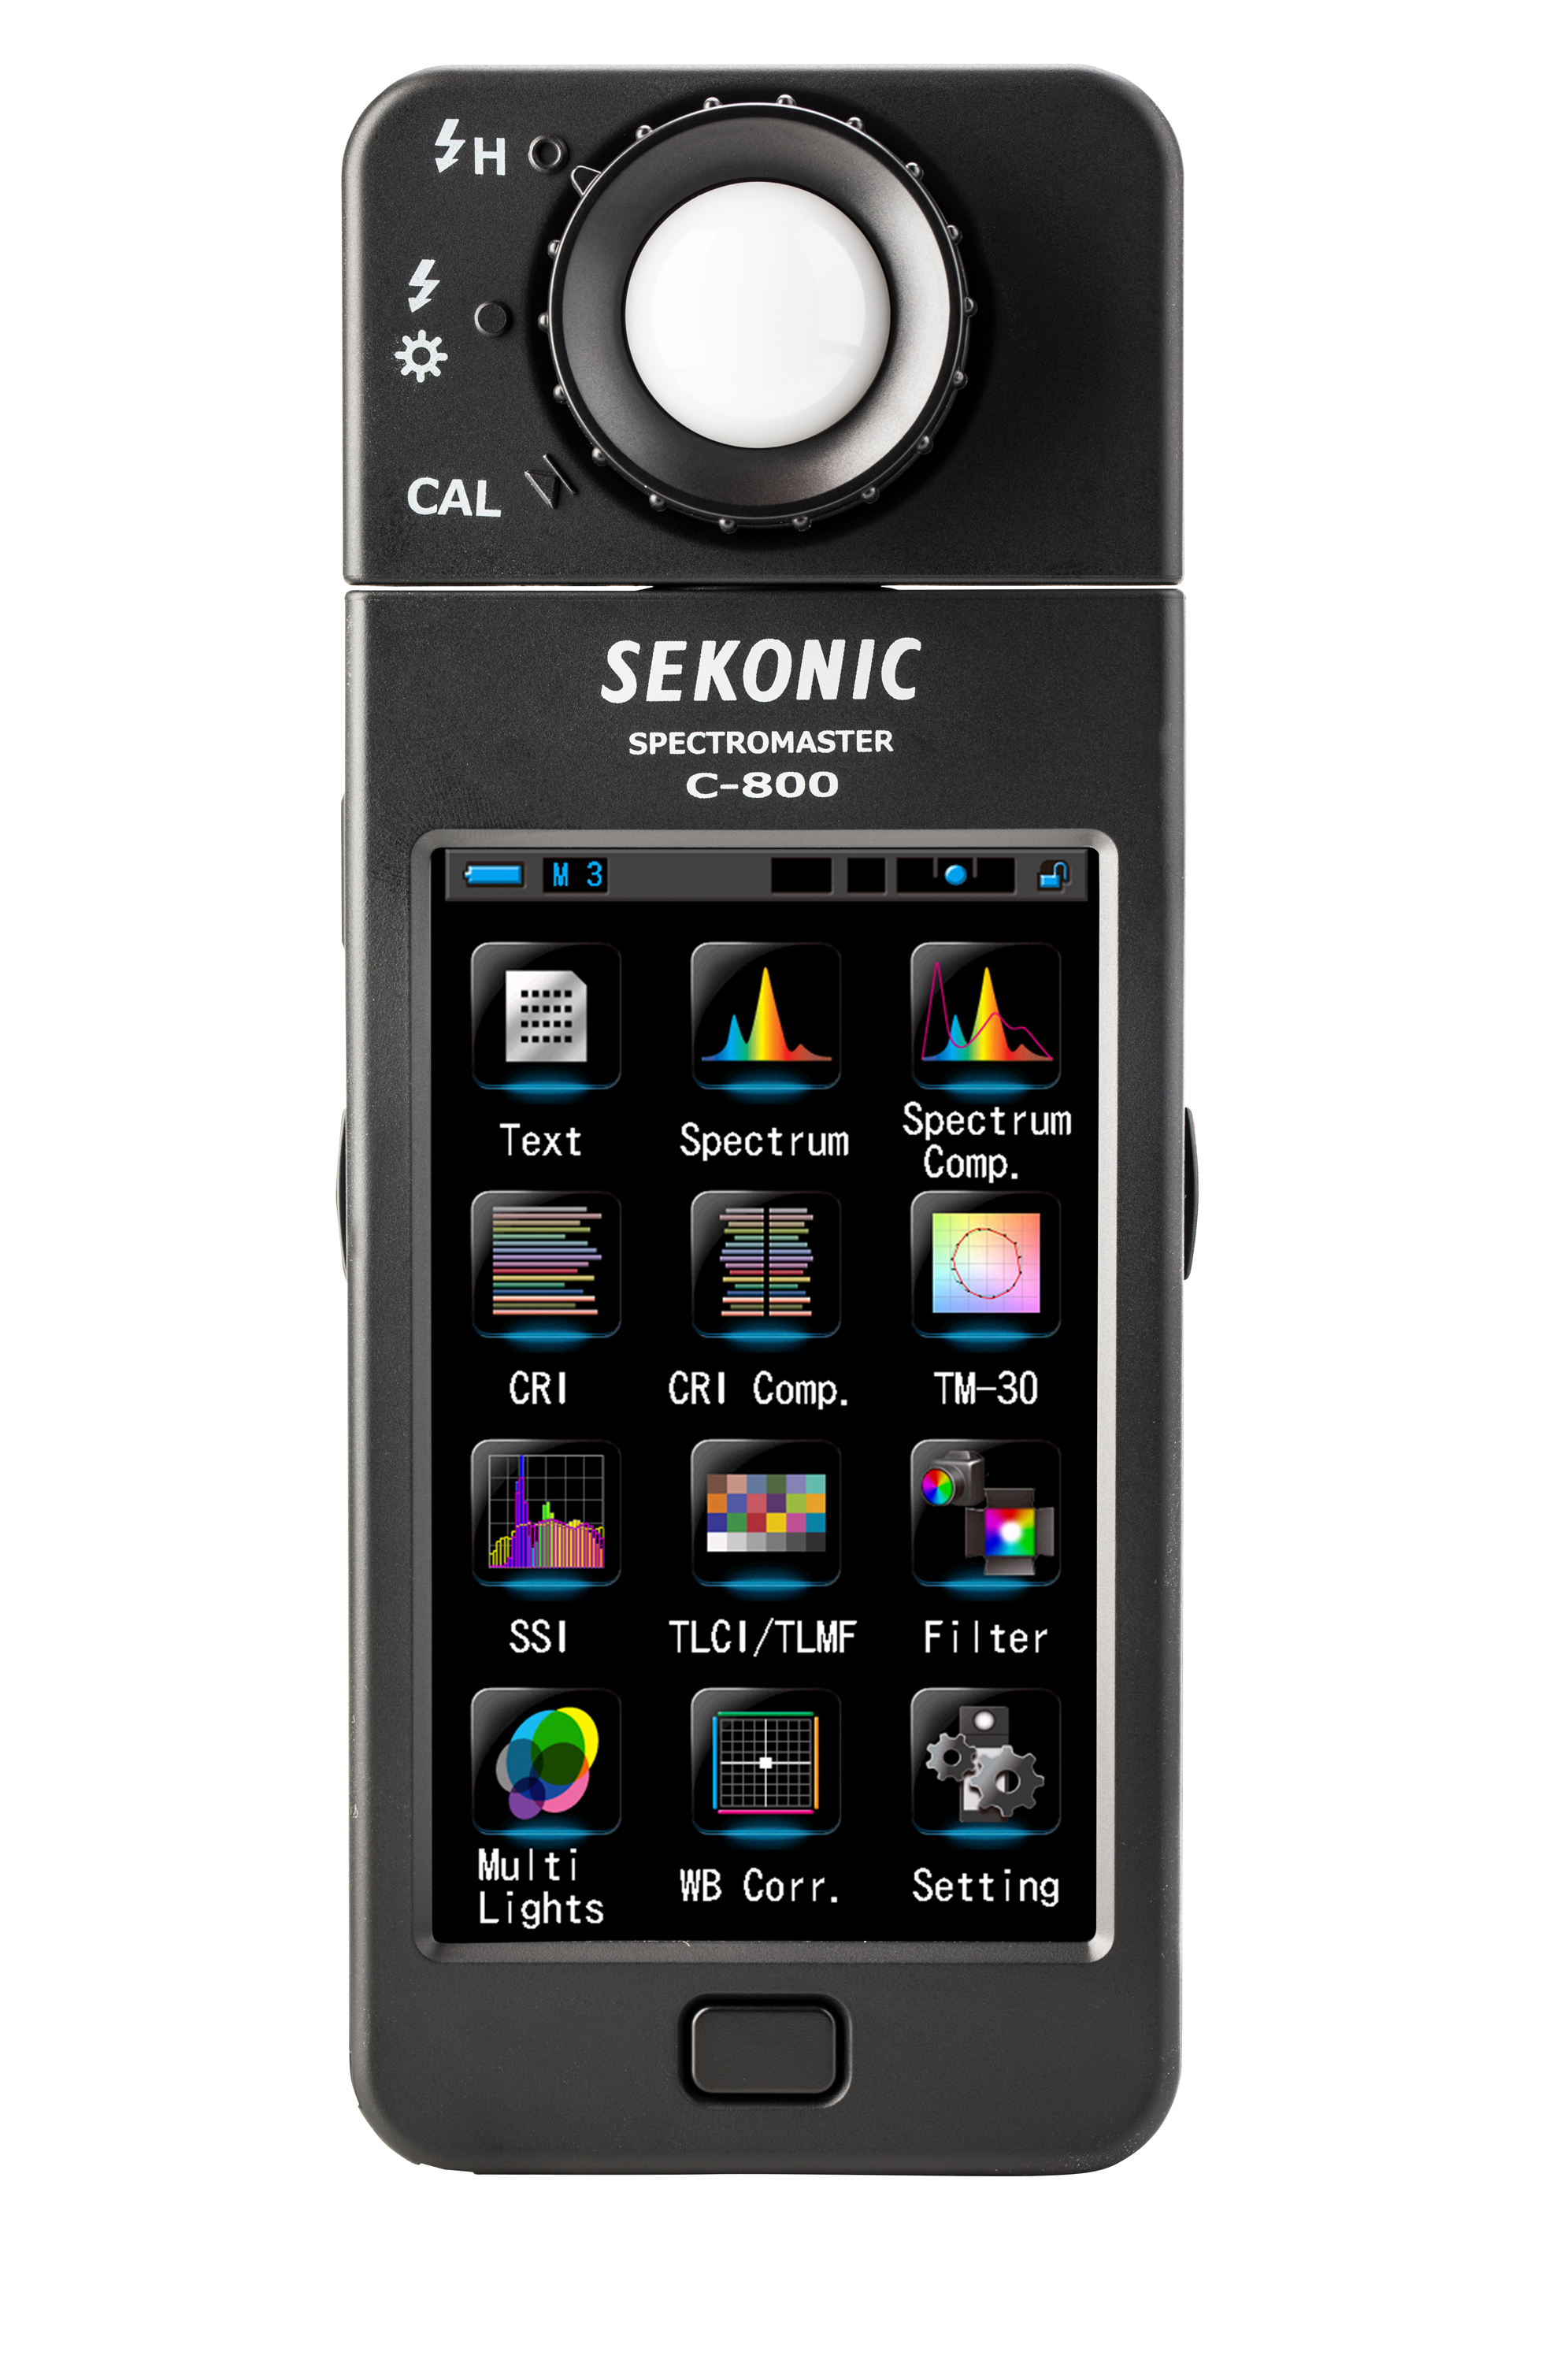 Sekonic Spectrometer C-800